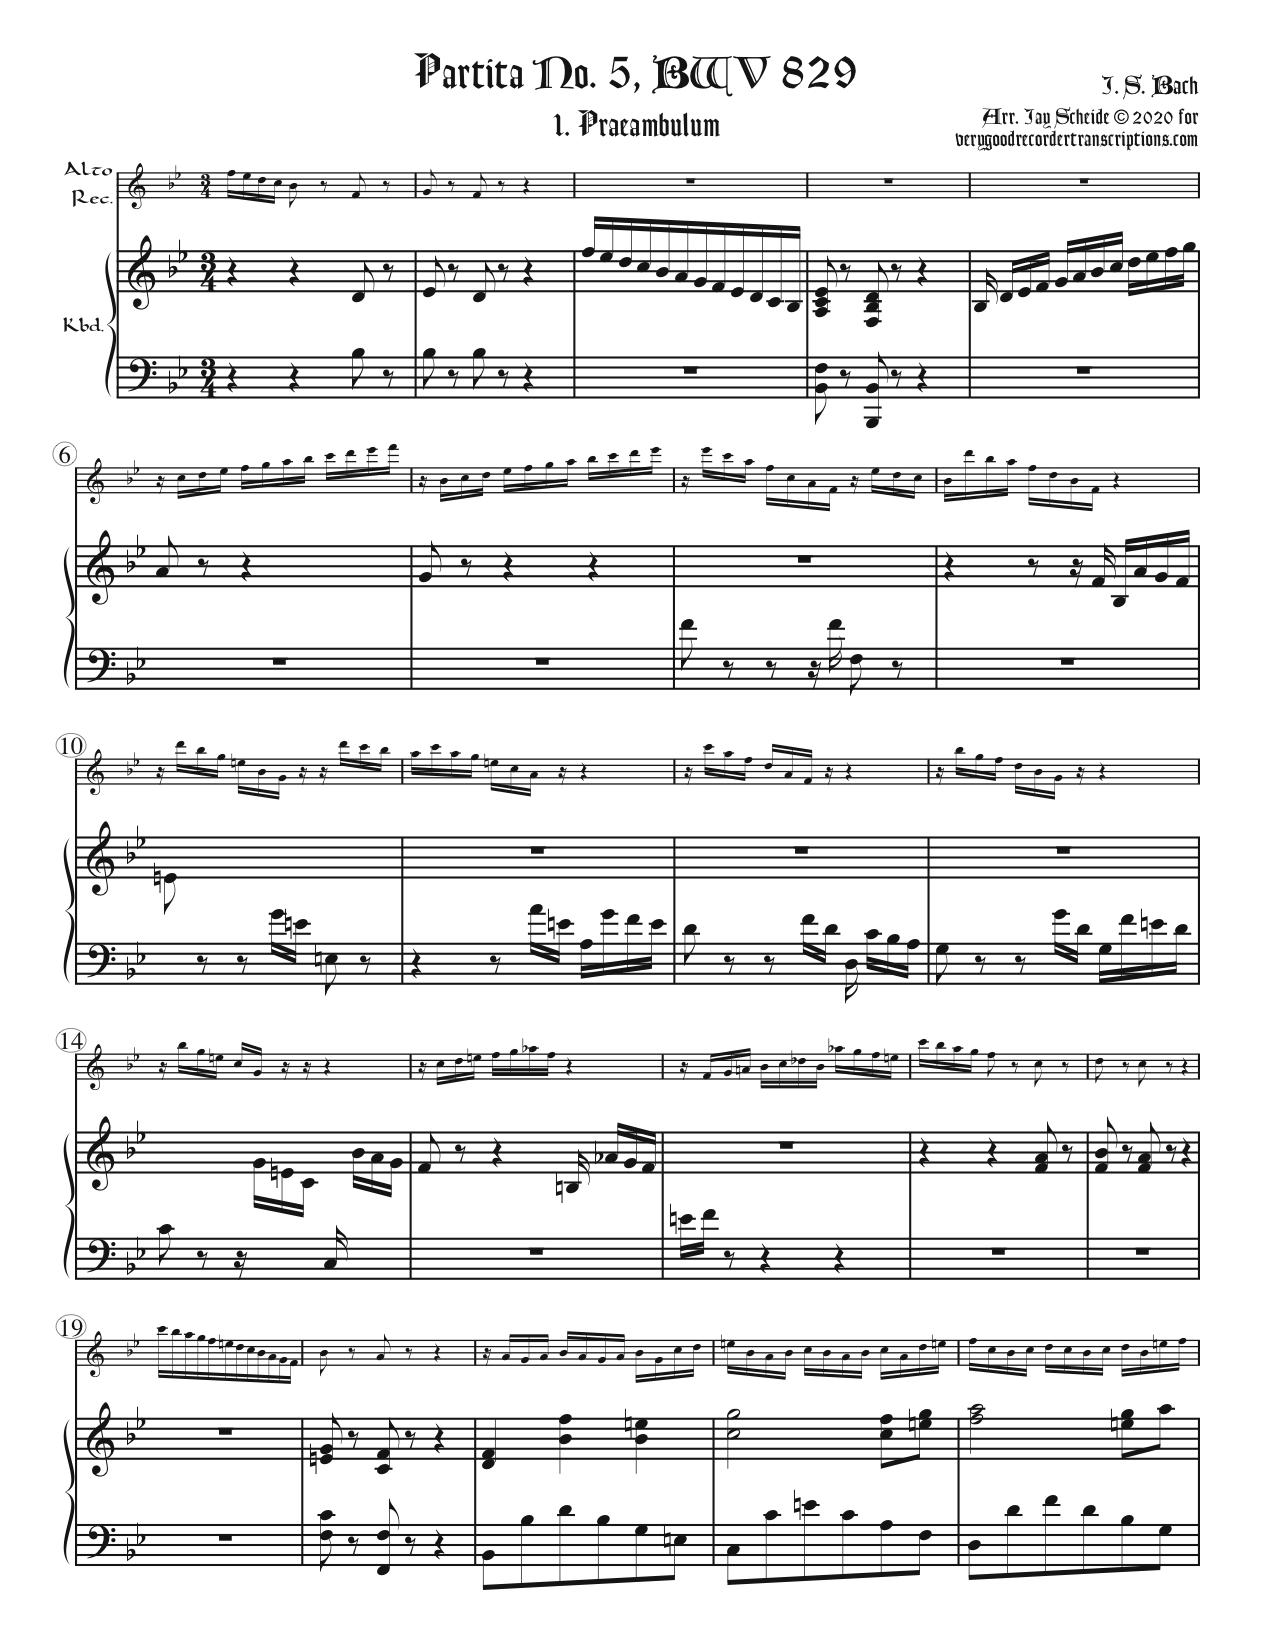 First three Mvts. from Partita No. 5, BWV 829